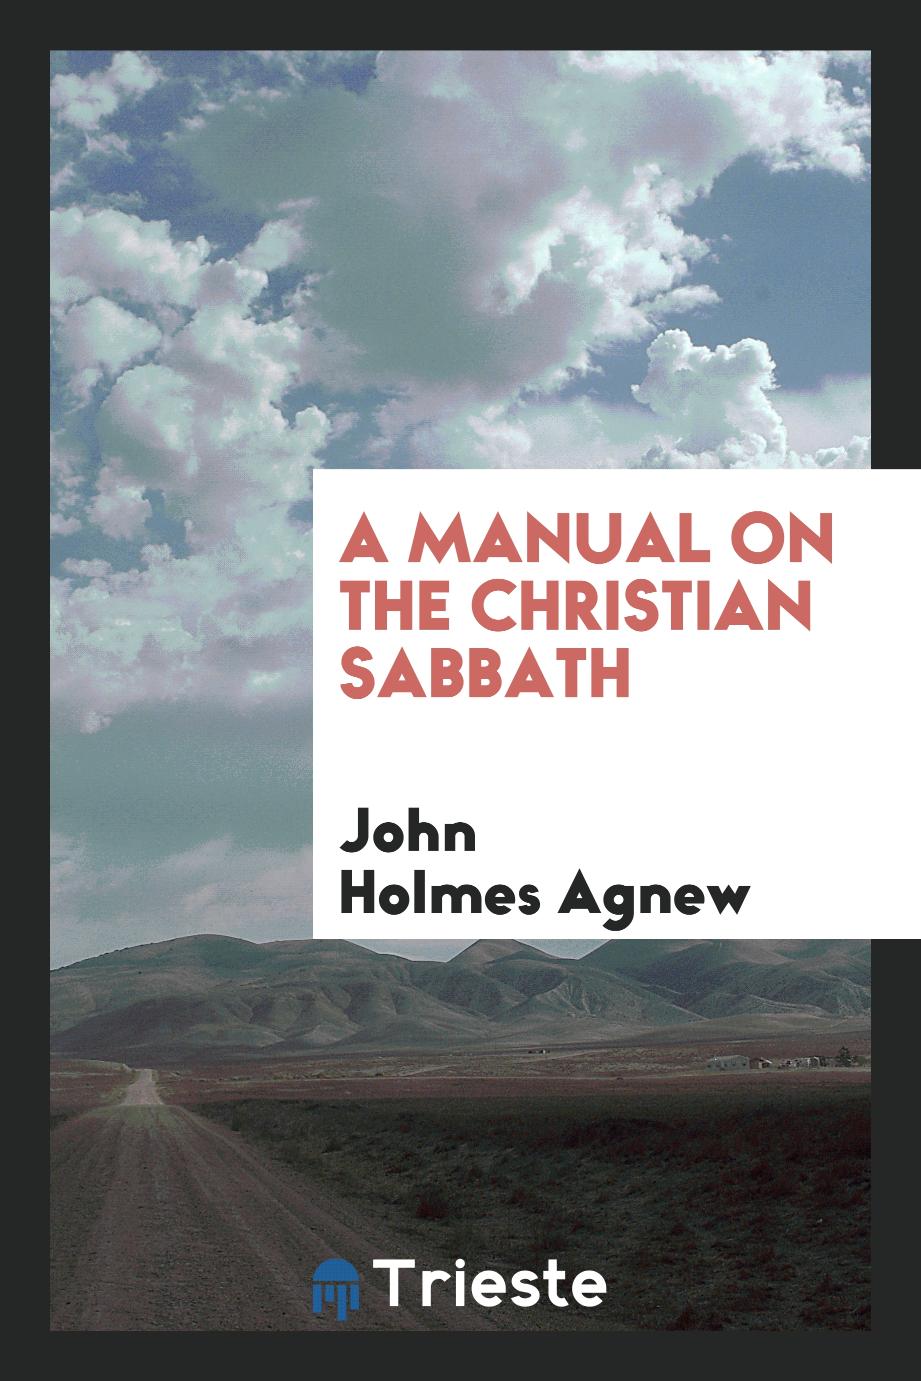 A manual on the Christian Sabbath